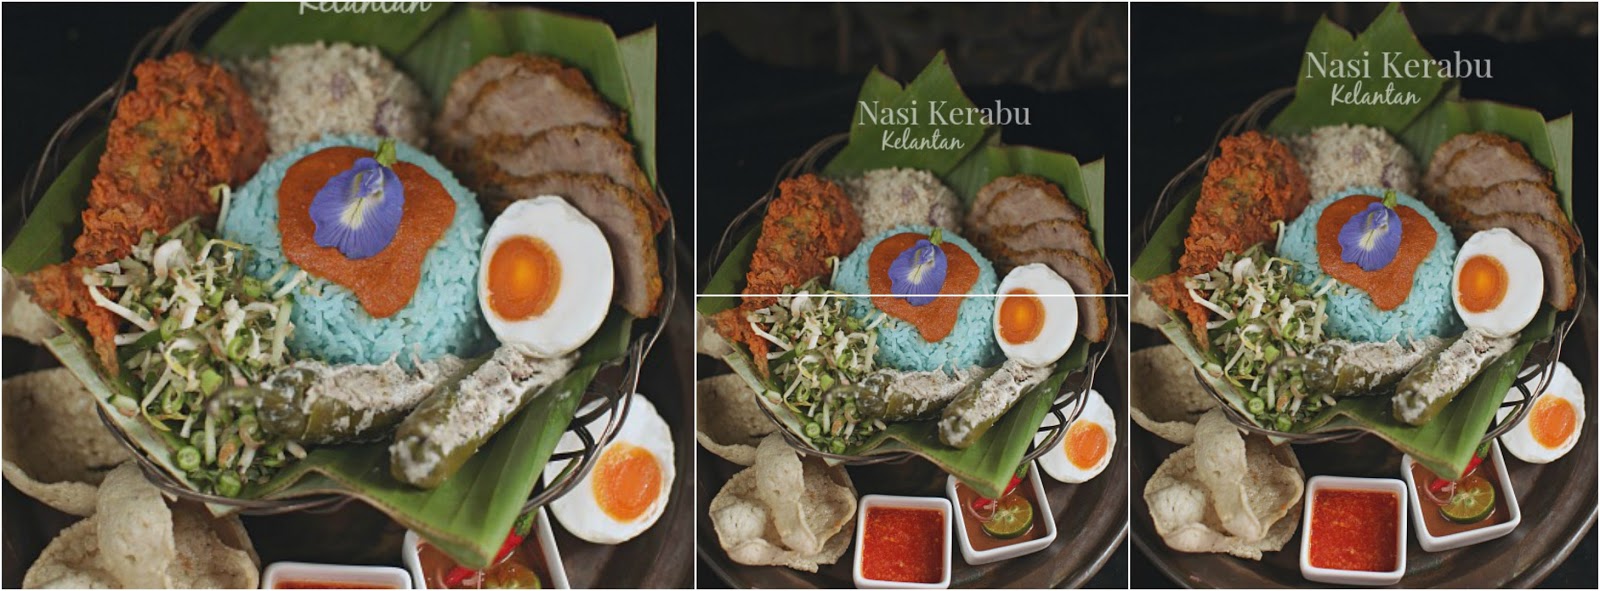 Resepi Nasi Kerabu Kelantan by Azlita Masam Manis